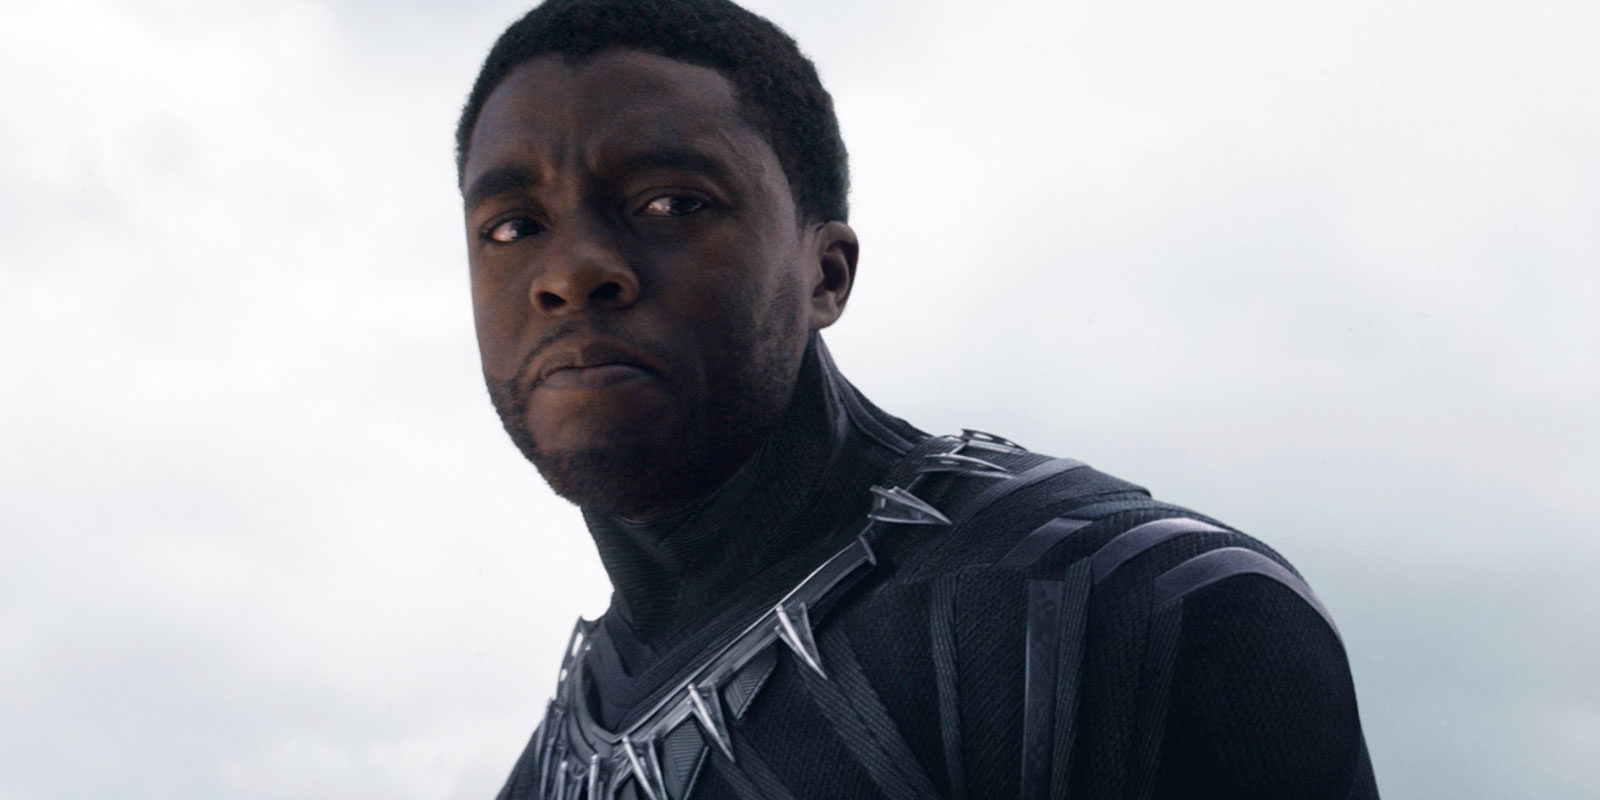 Fans de DC inician una campaña para boicotear 'Black Panther' en Rotten Tomatoes